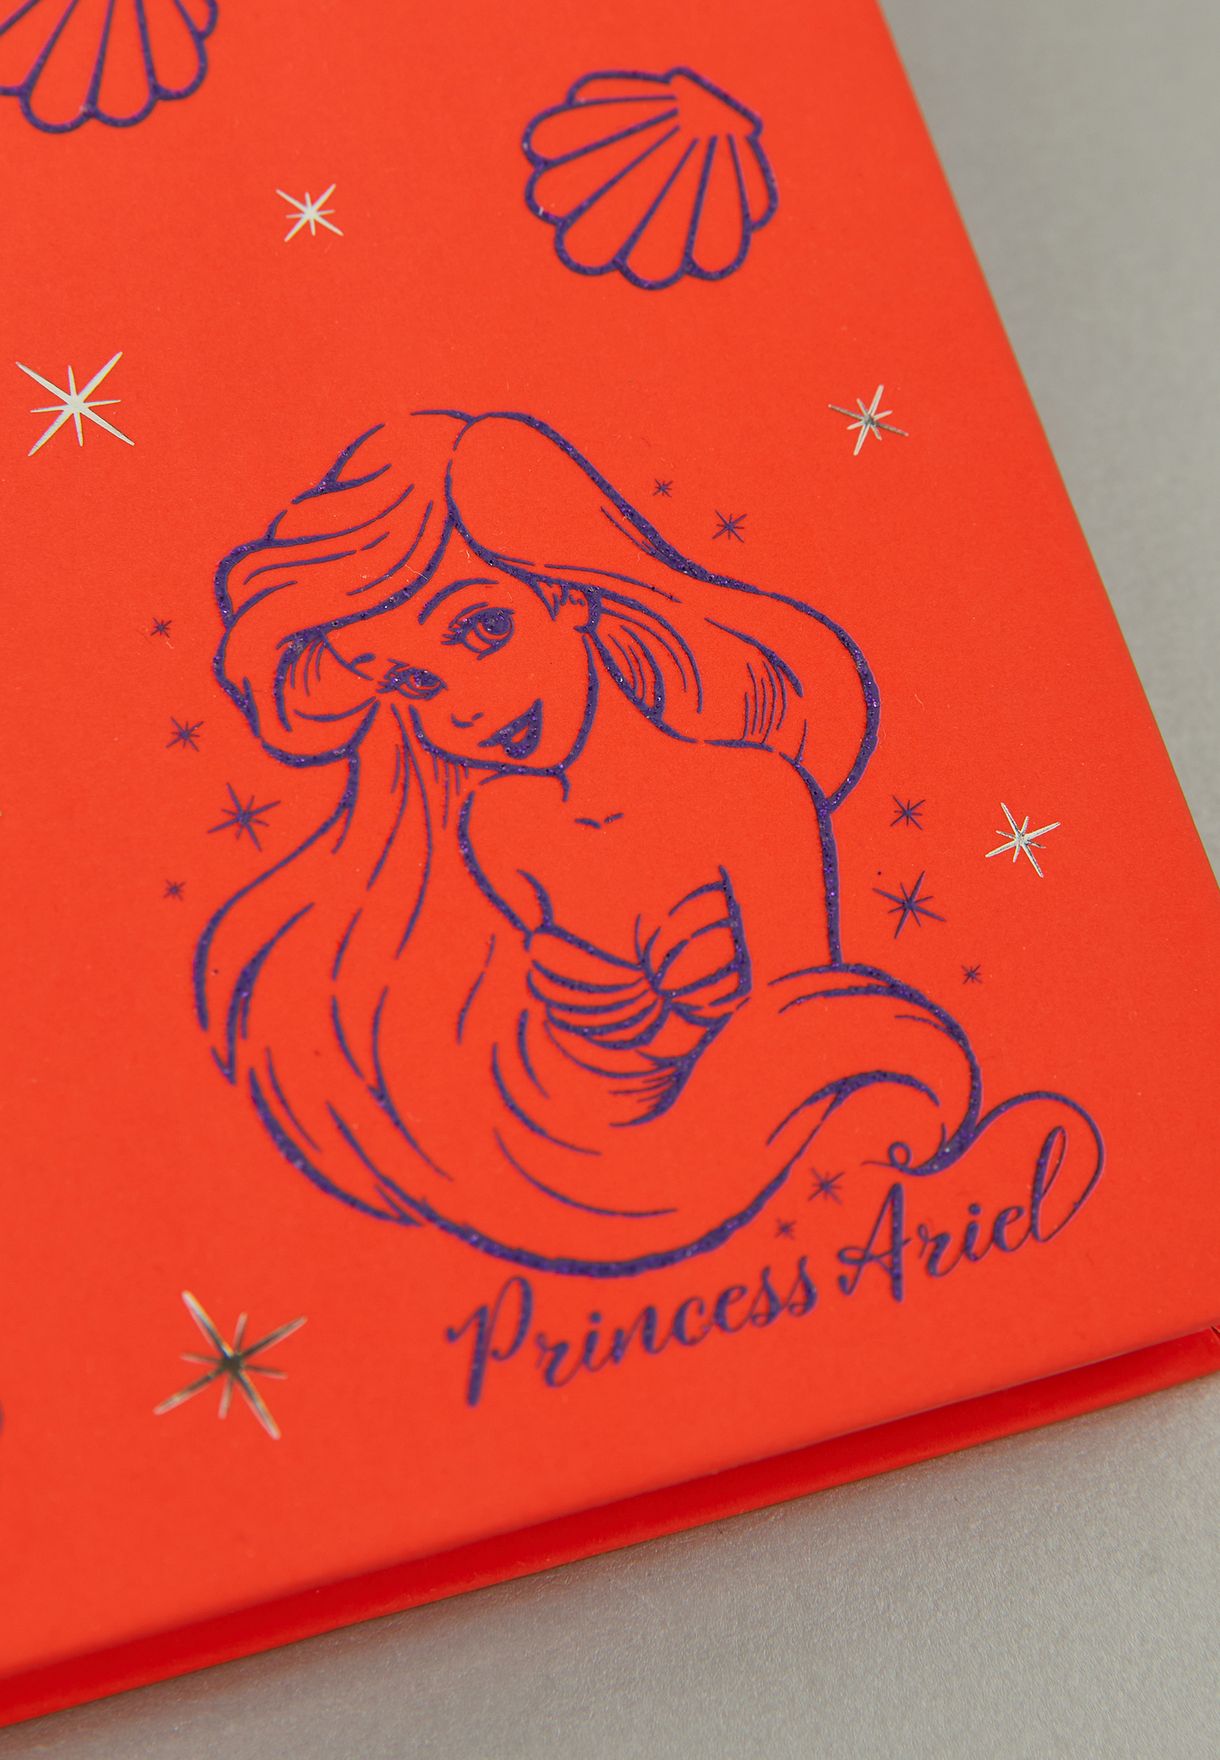 A5 Disney Princess Ariel Notebook